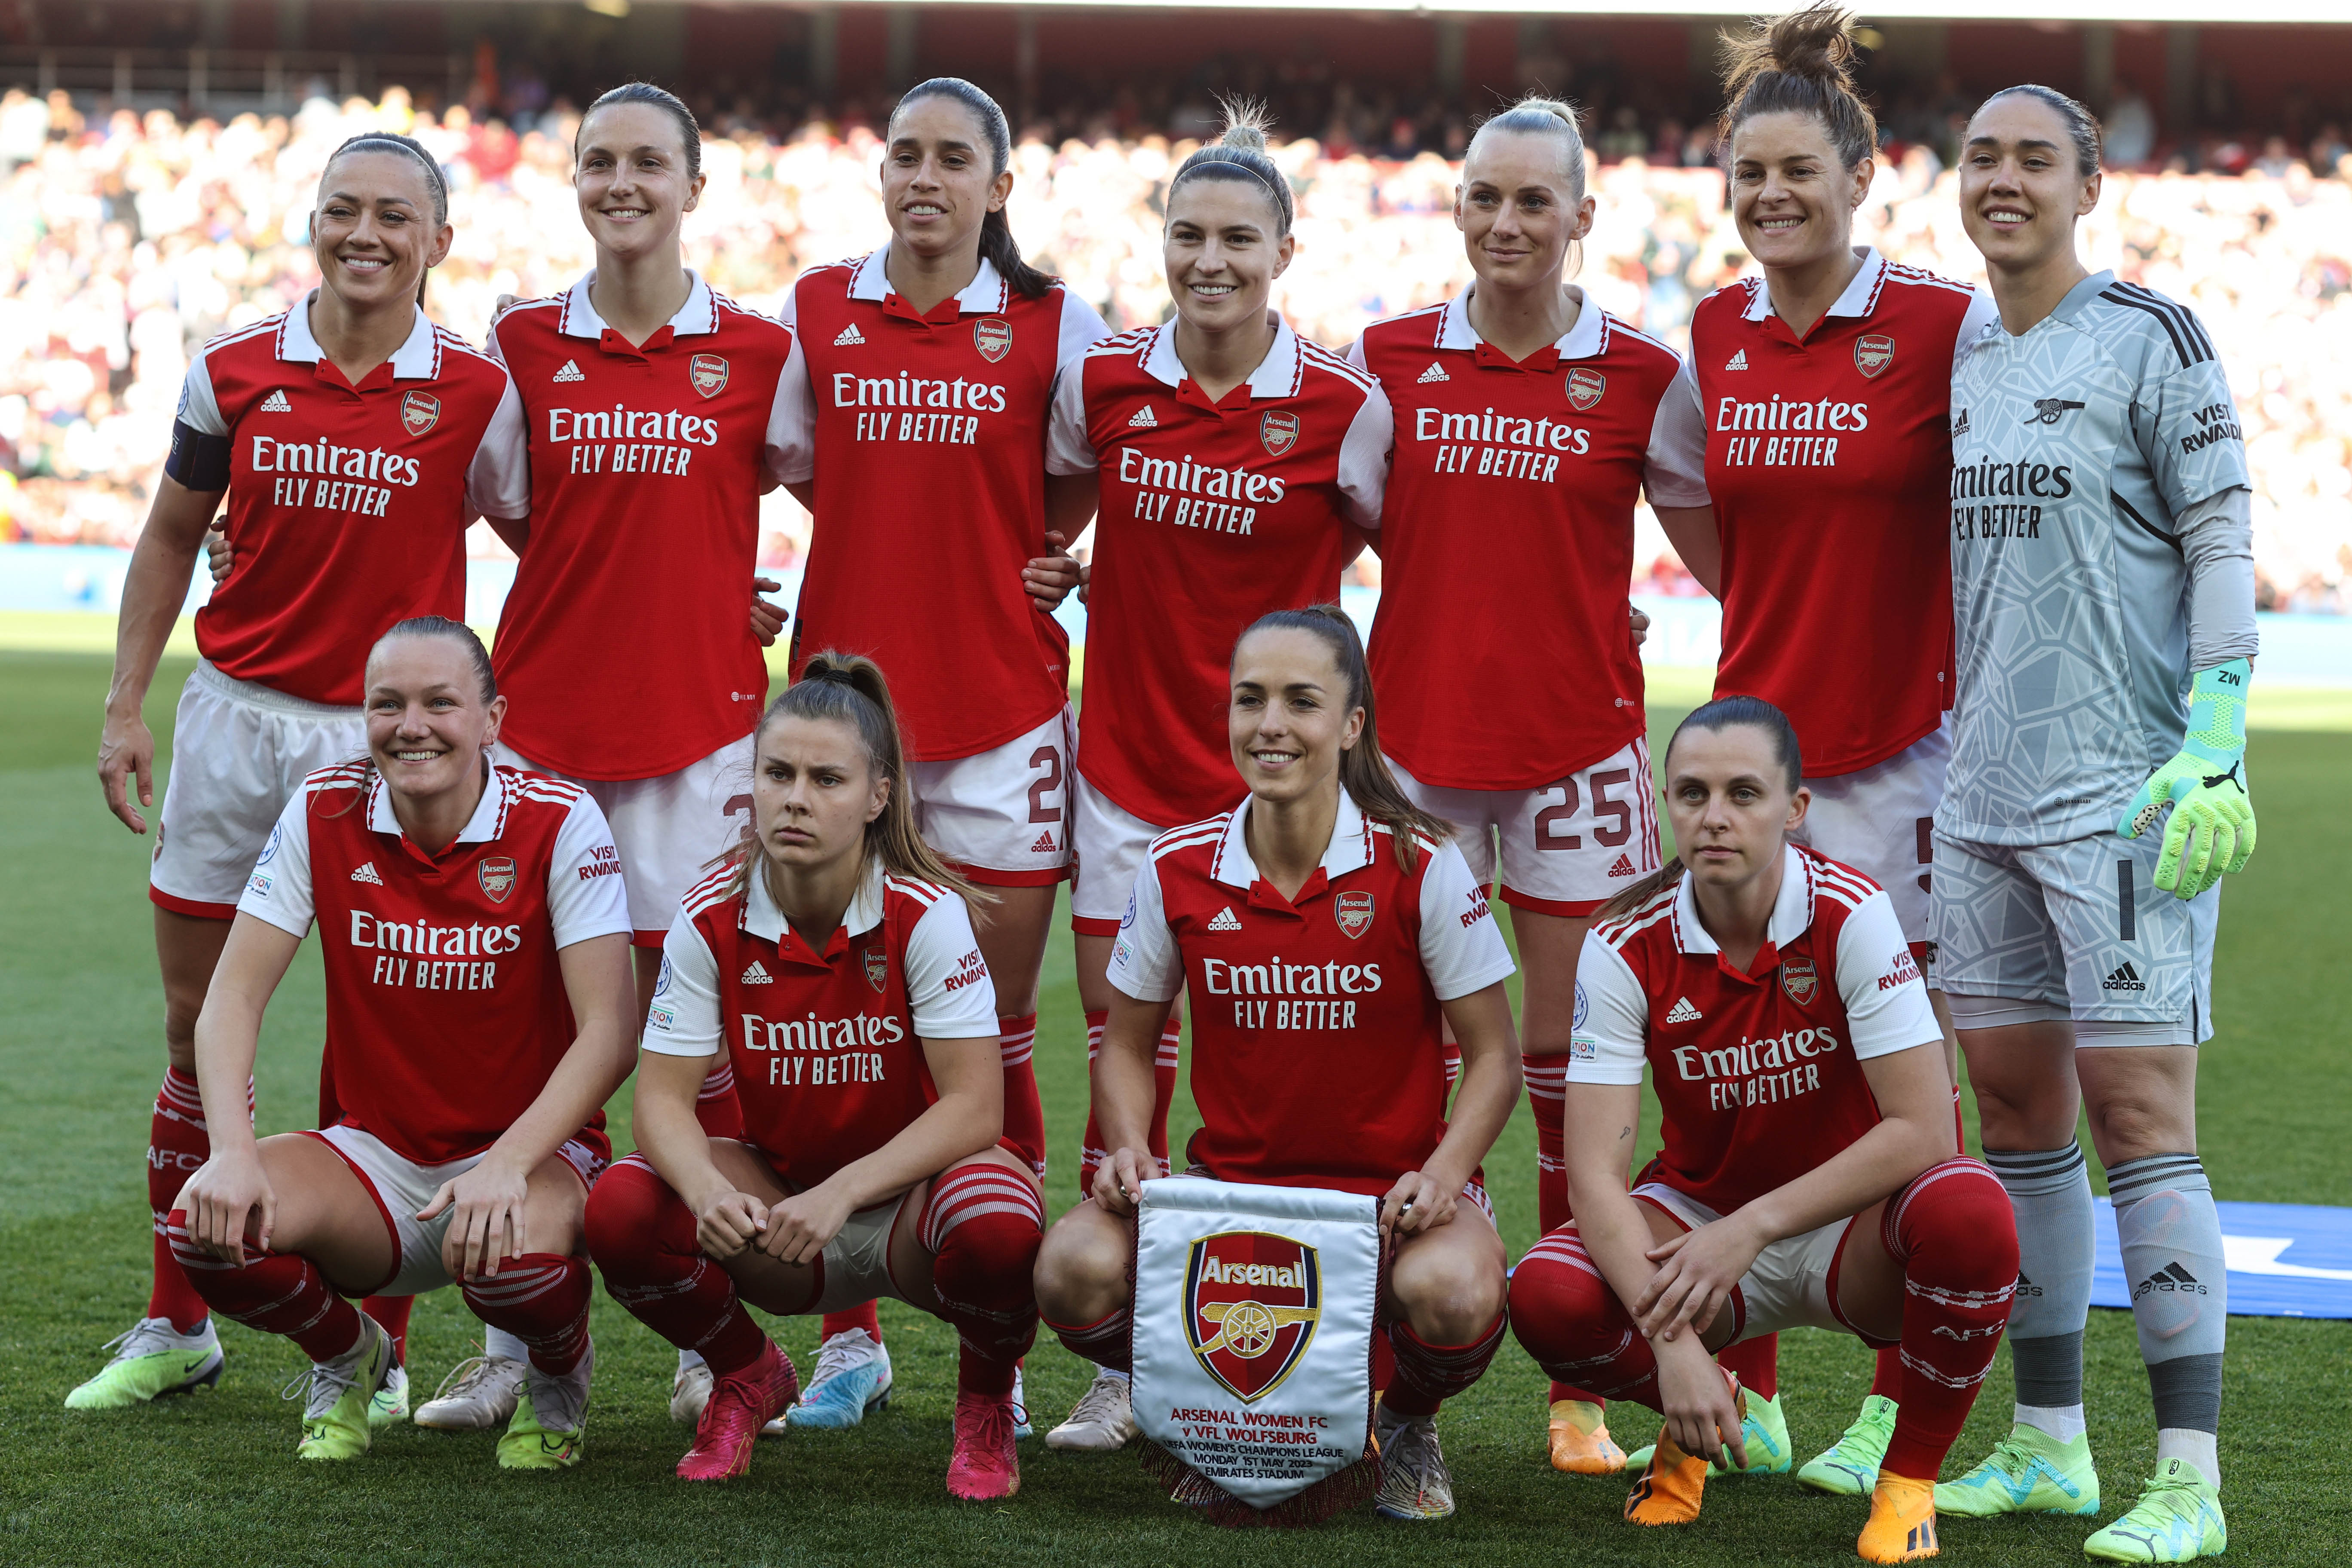 Live Blog: Arsenal Women 4-0 up against Brighton